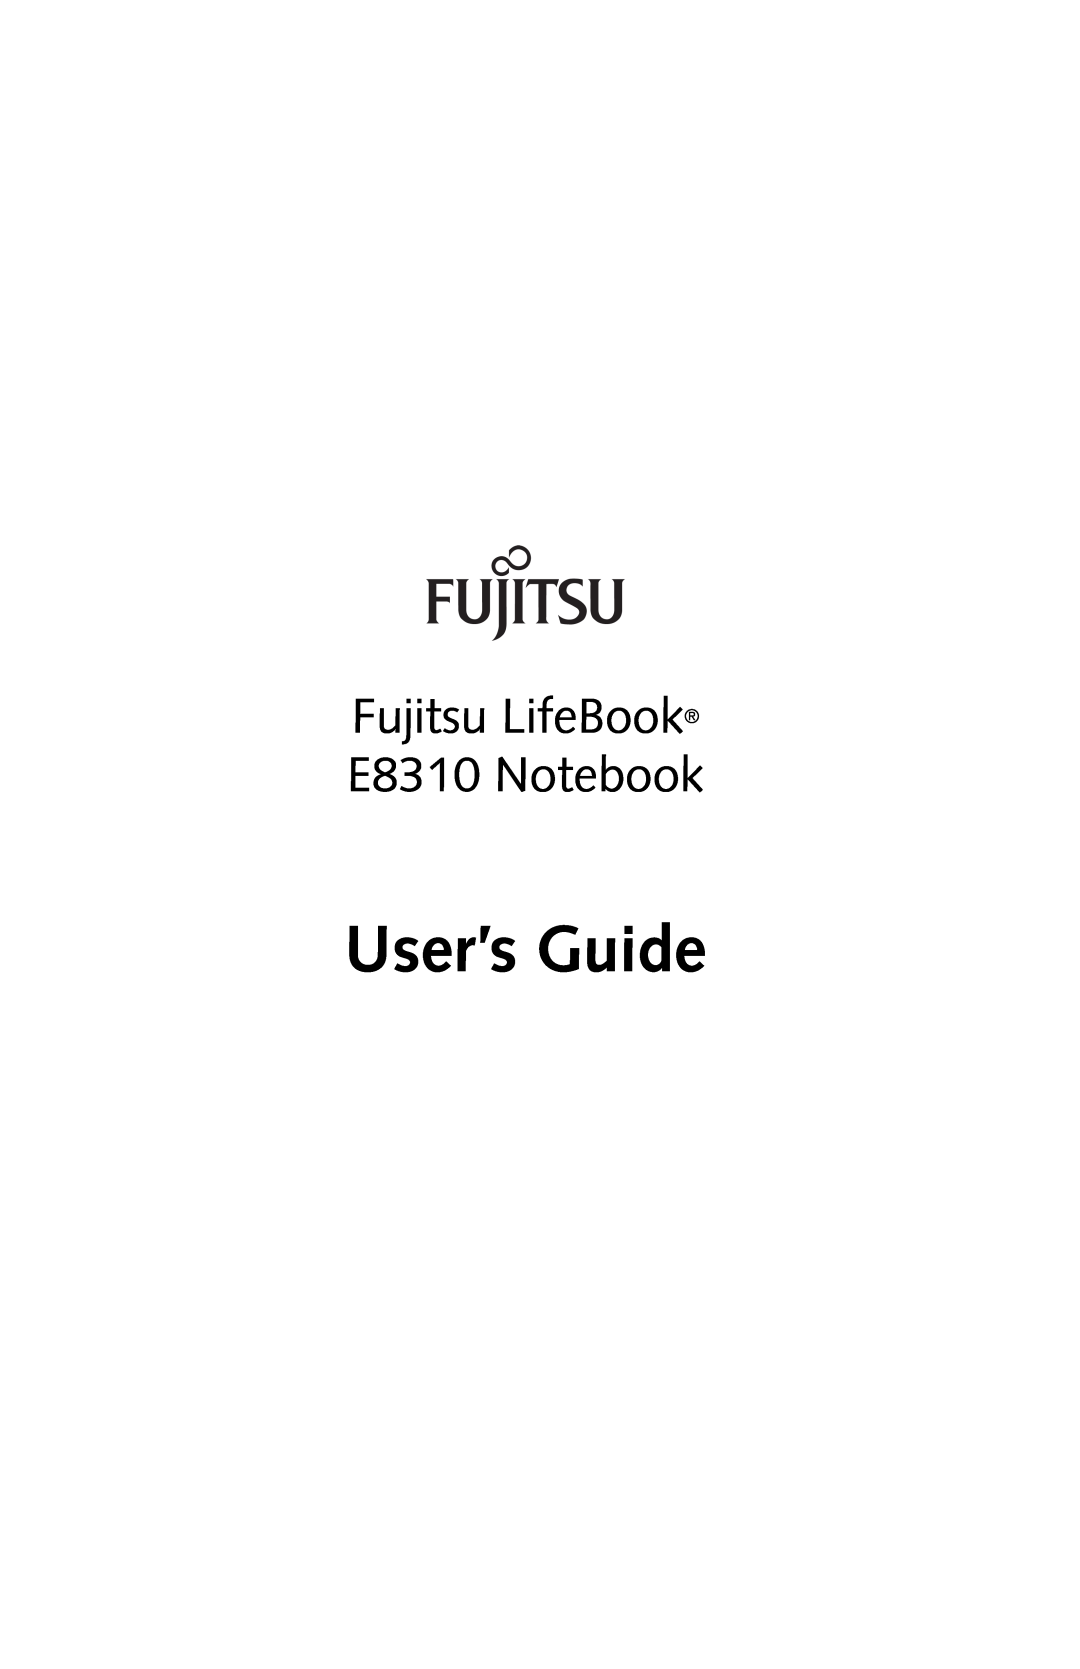 Fujitsu manual User’s Guide, Fujitsu LifeBook E8310 Notebook 